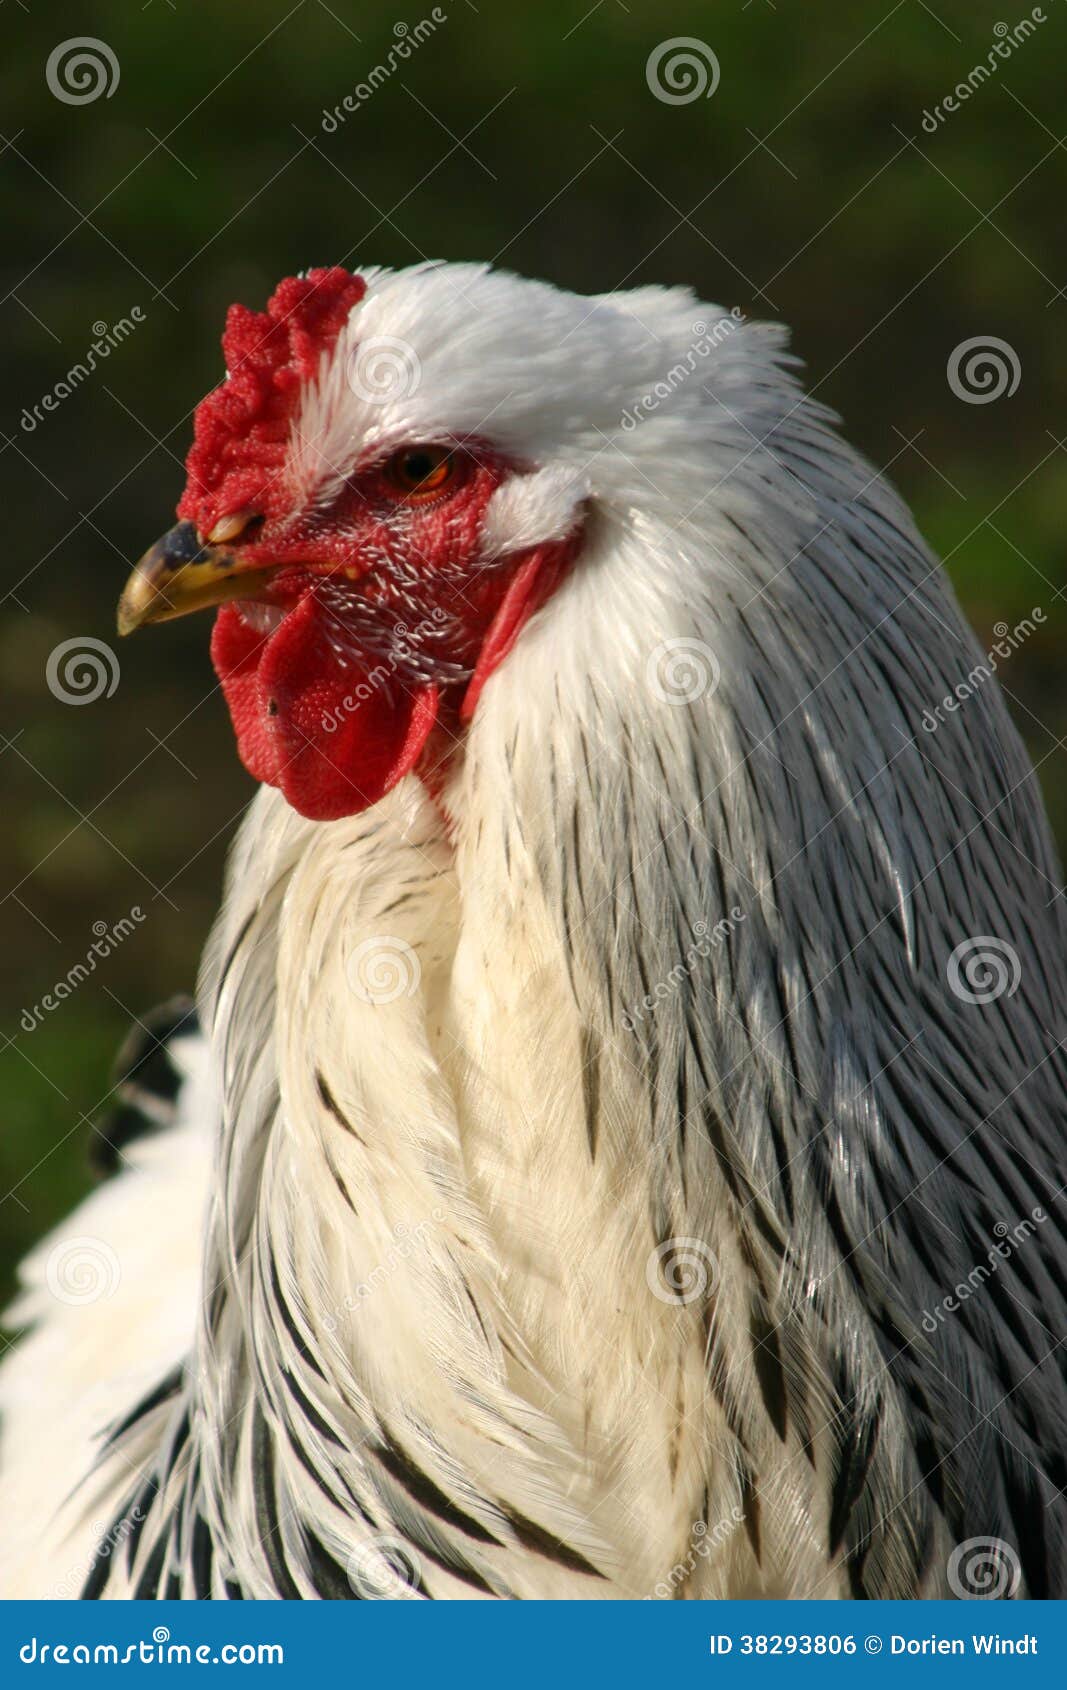 https://thumbs.dreamstime.com/z/rooster-brahma-chicken-38293806.jpg